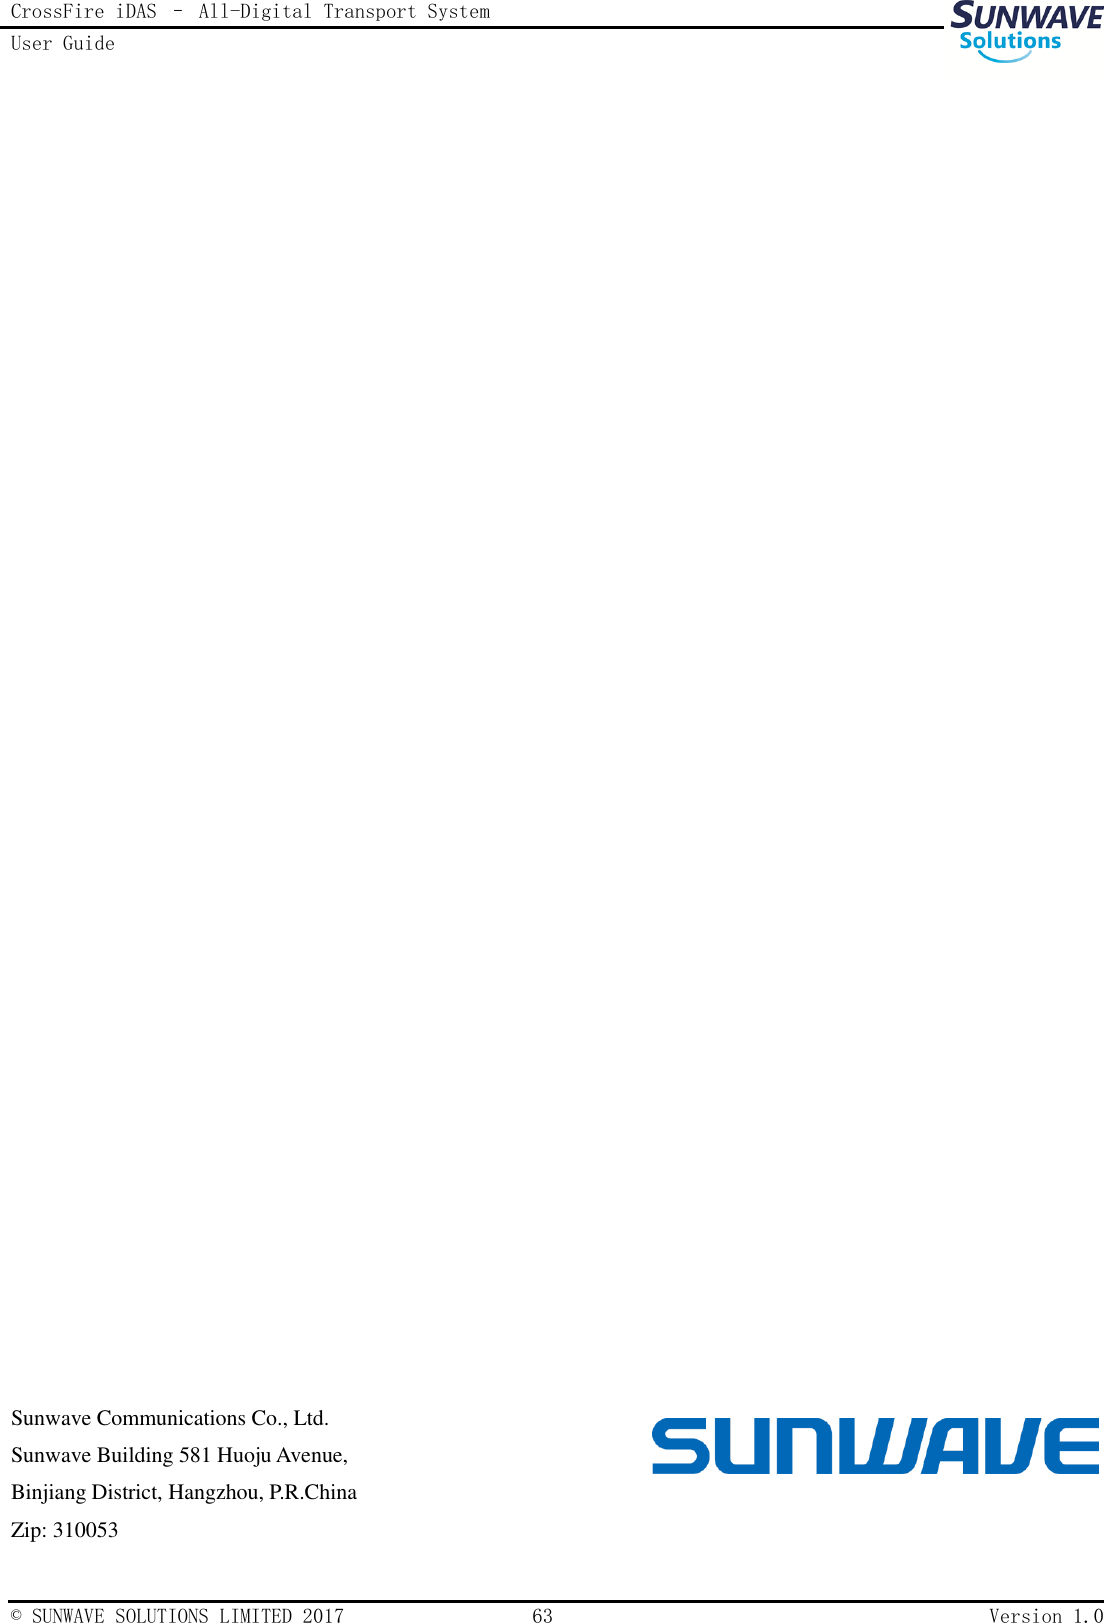 CrossFire iDAS – All-Digital Transport System User Guide   © SUNWAVE SOLUTIONS LIMITED 2017  63  Version 1.0                             Sunwave Communications Co., Ltd.                                                                                         Sunwave Building 581 Huoju Avenue,   Binjiang District, Hangzhou, P.R.China Zip: 310053 